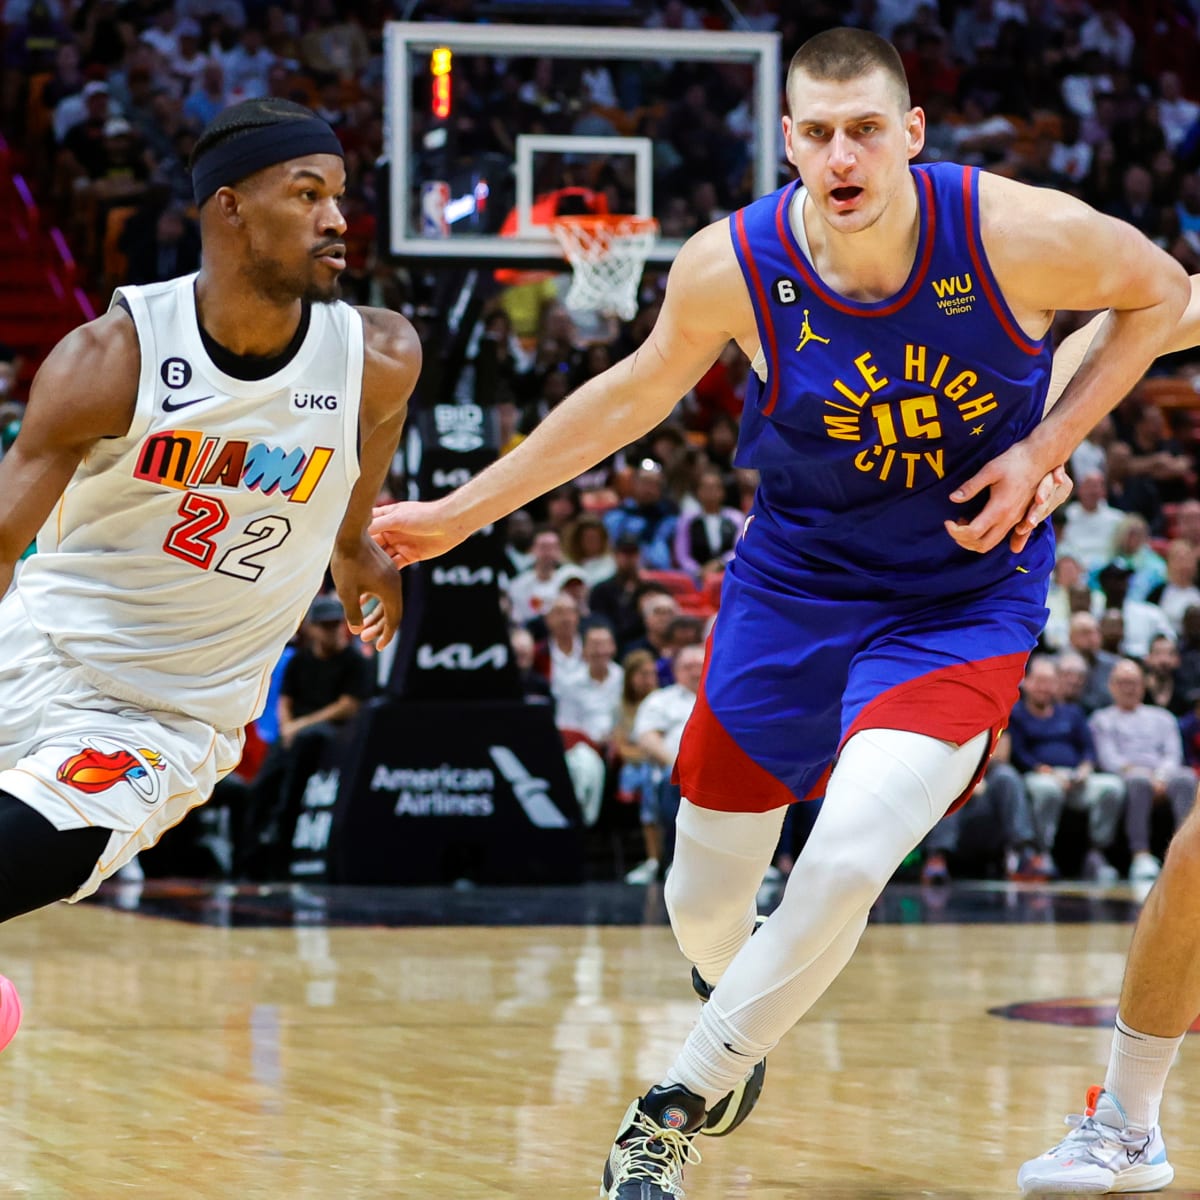 Kansan Christian Braun's Denver Nuggets can clinch NBA title